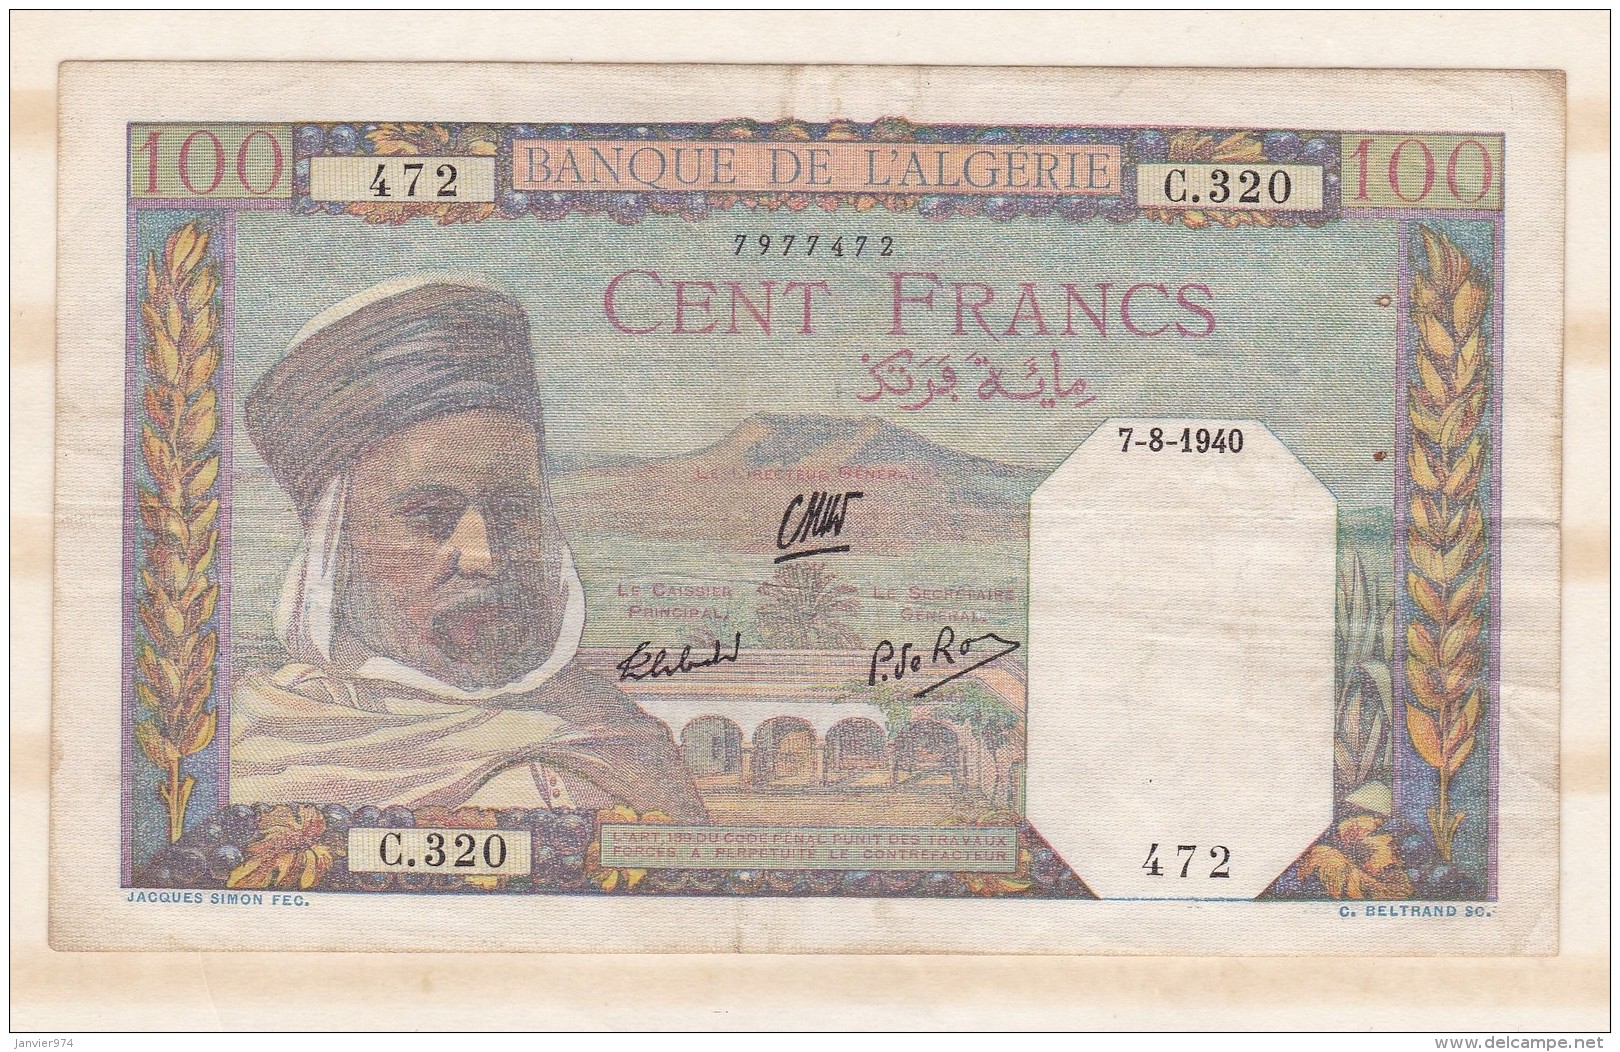 Billet . 100 FRANCS 27 - 8  - 1940, Alphabet C.320  N° 472 - Algerien